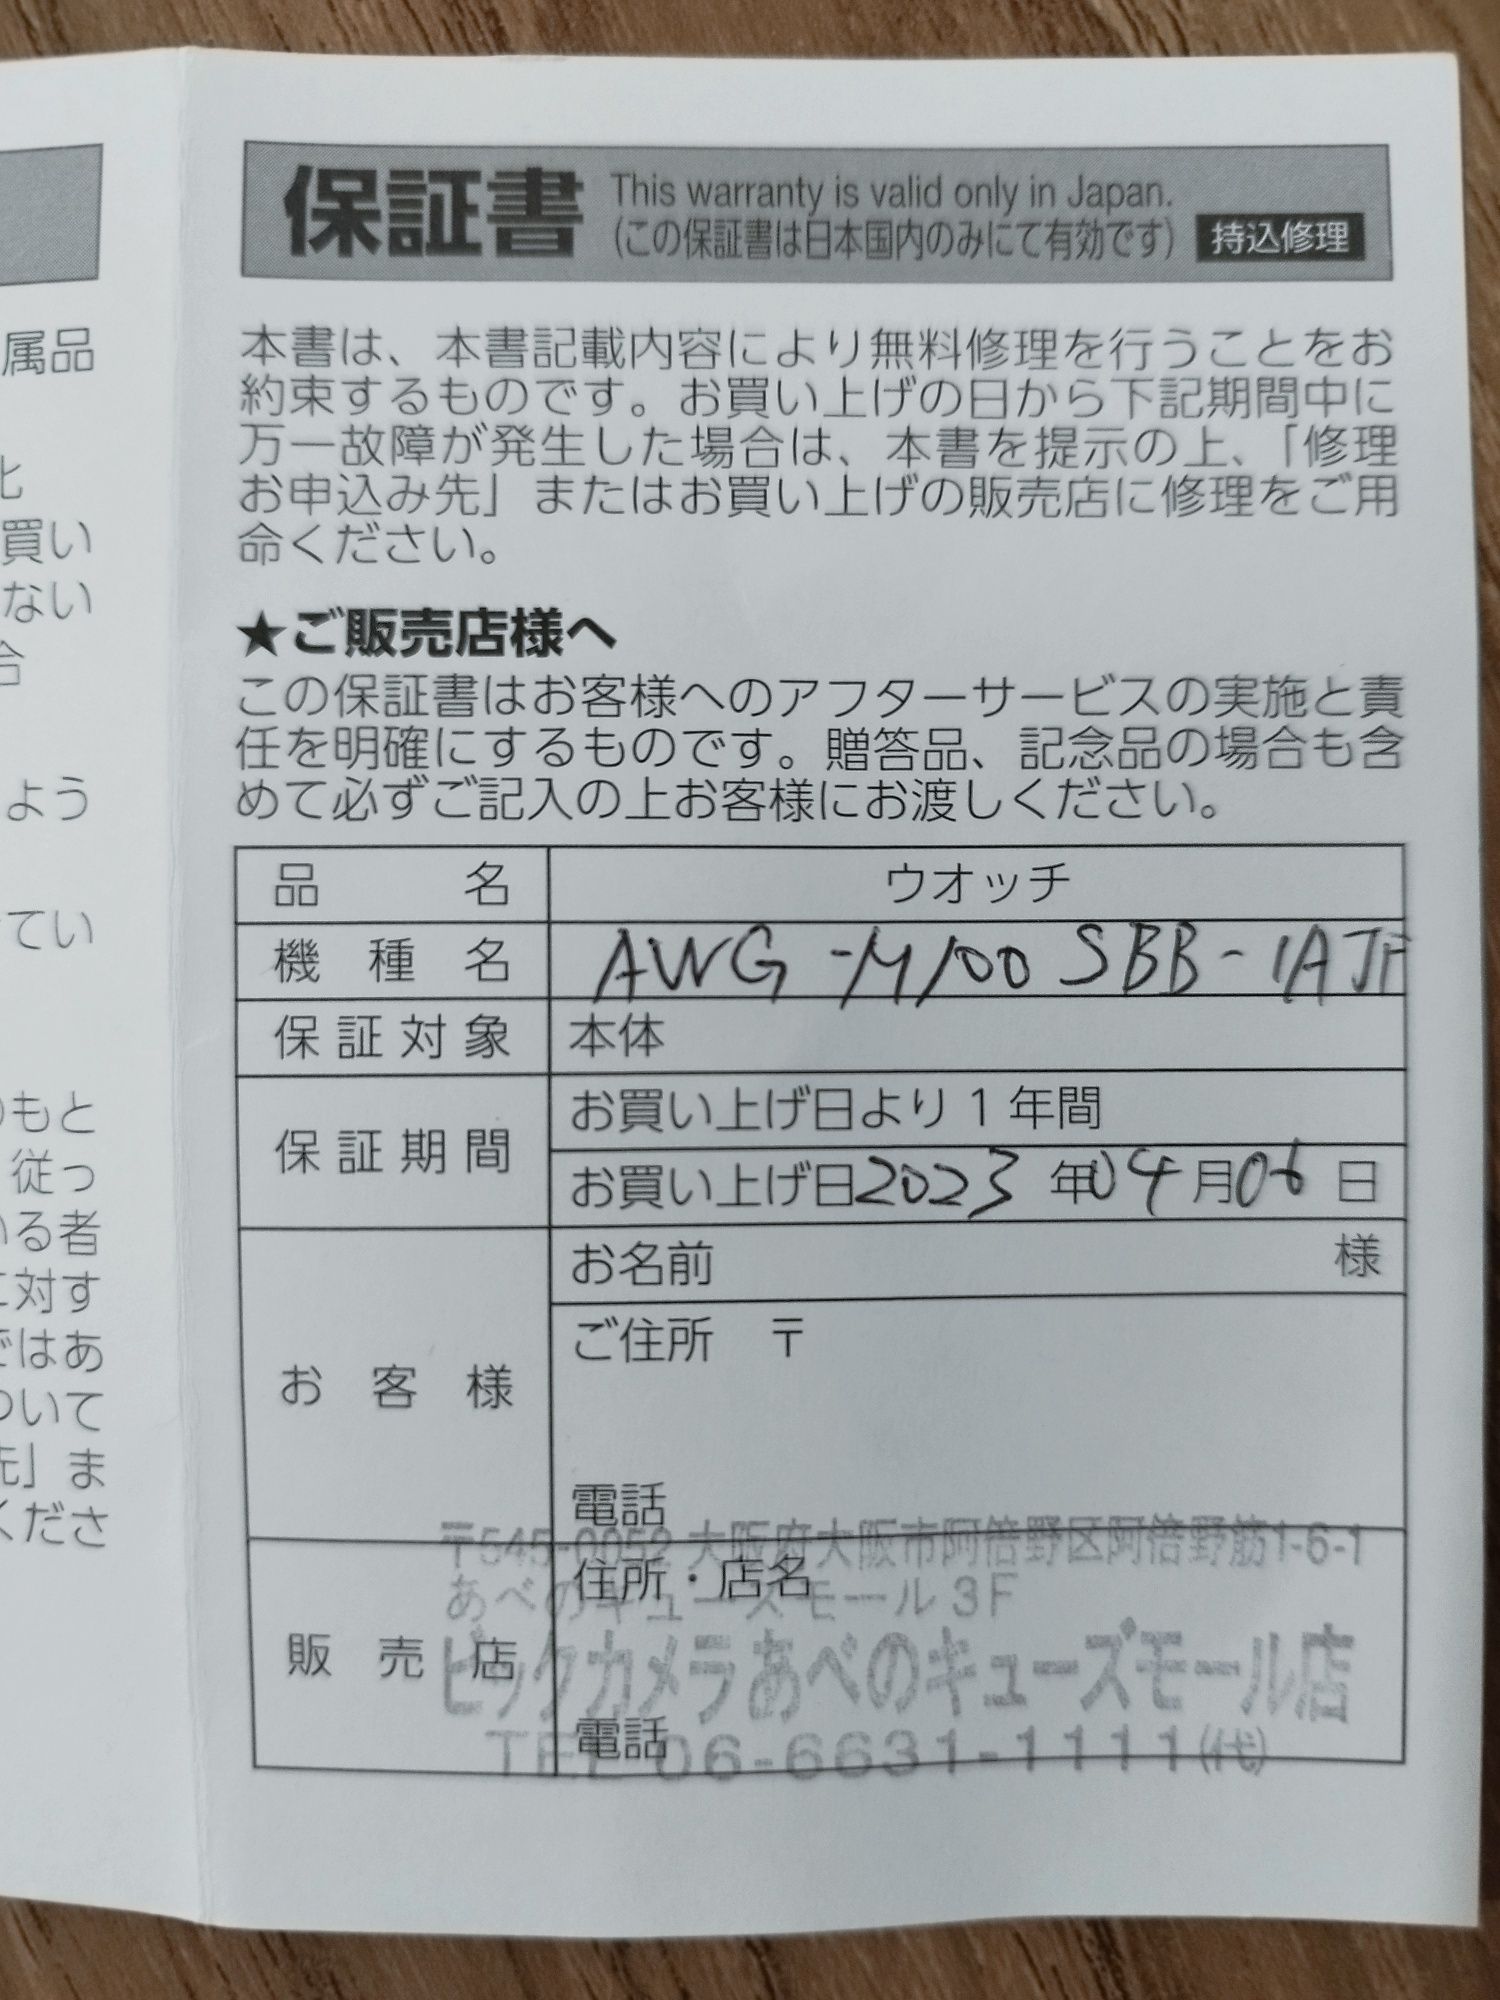 Casio G-Shock AWG-M100SBB Japan